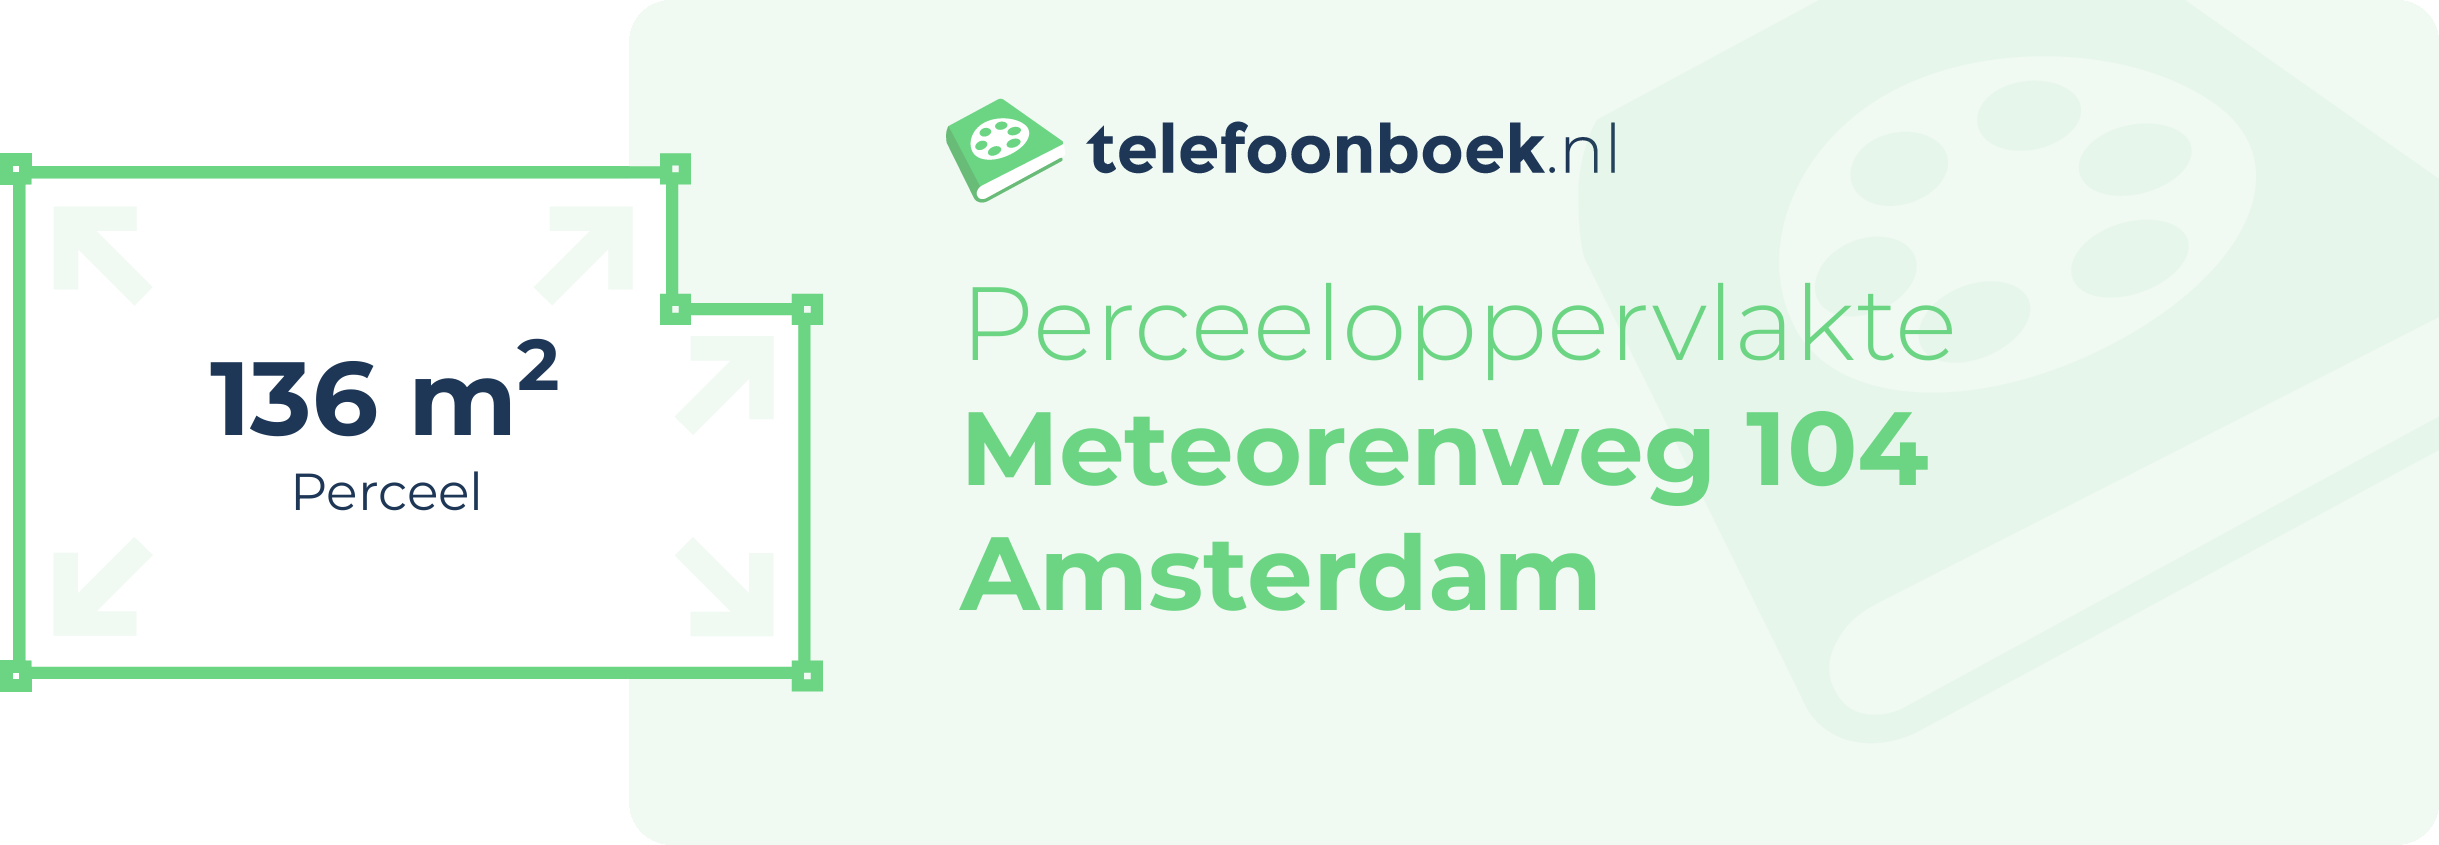 Perceeloppervlakte Meteorenweg 104 Amsterdam